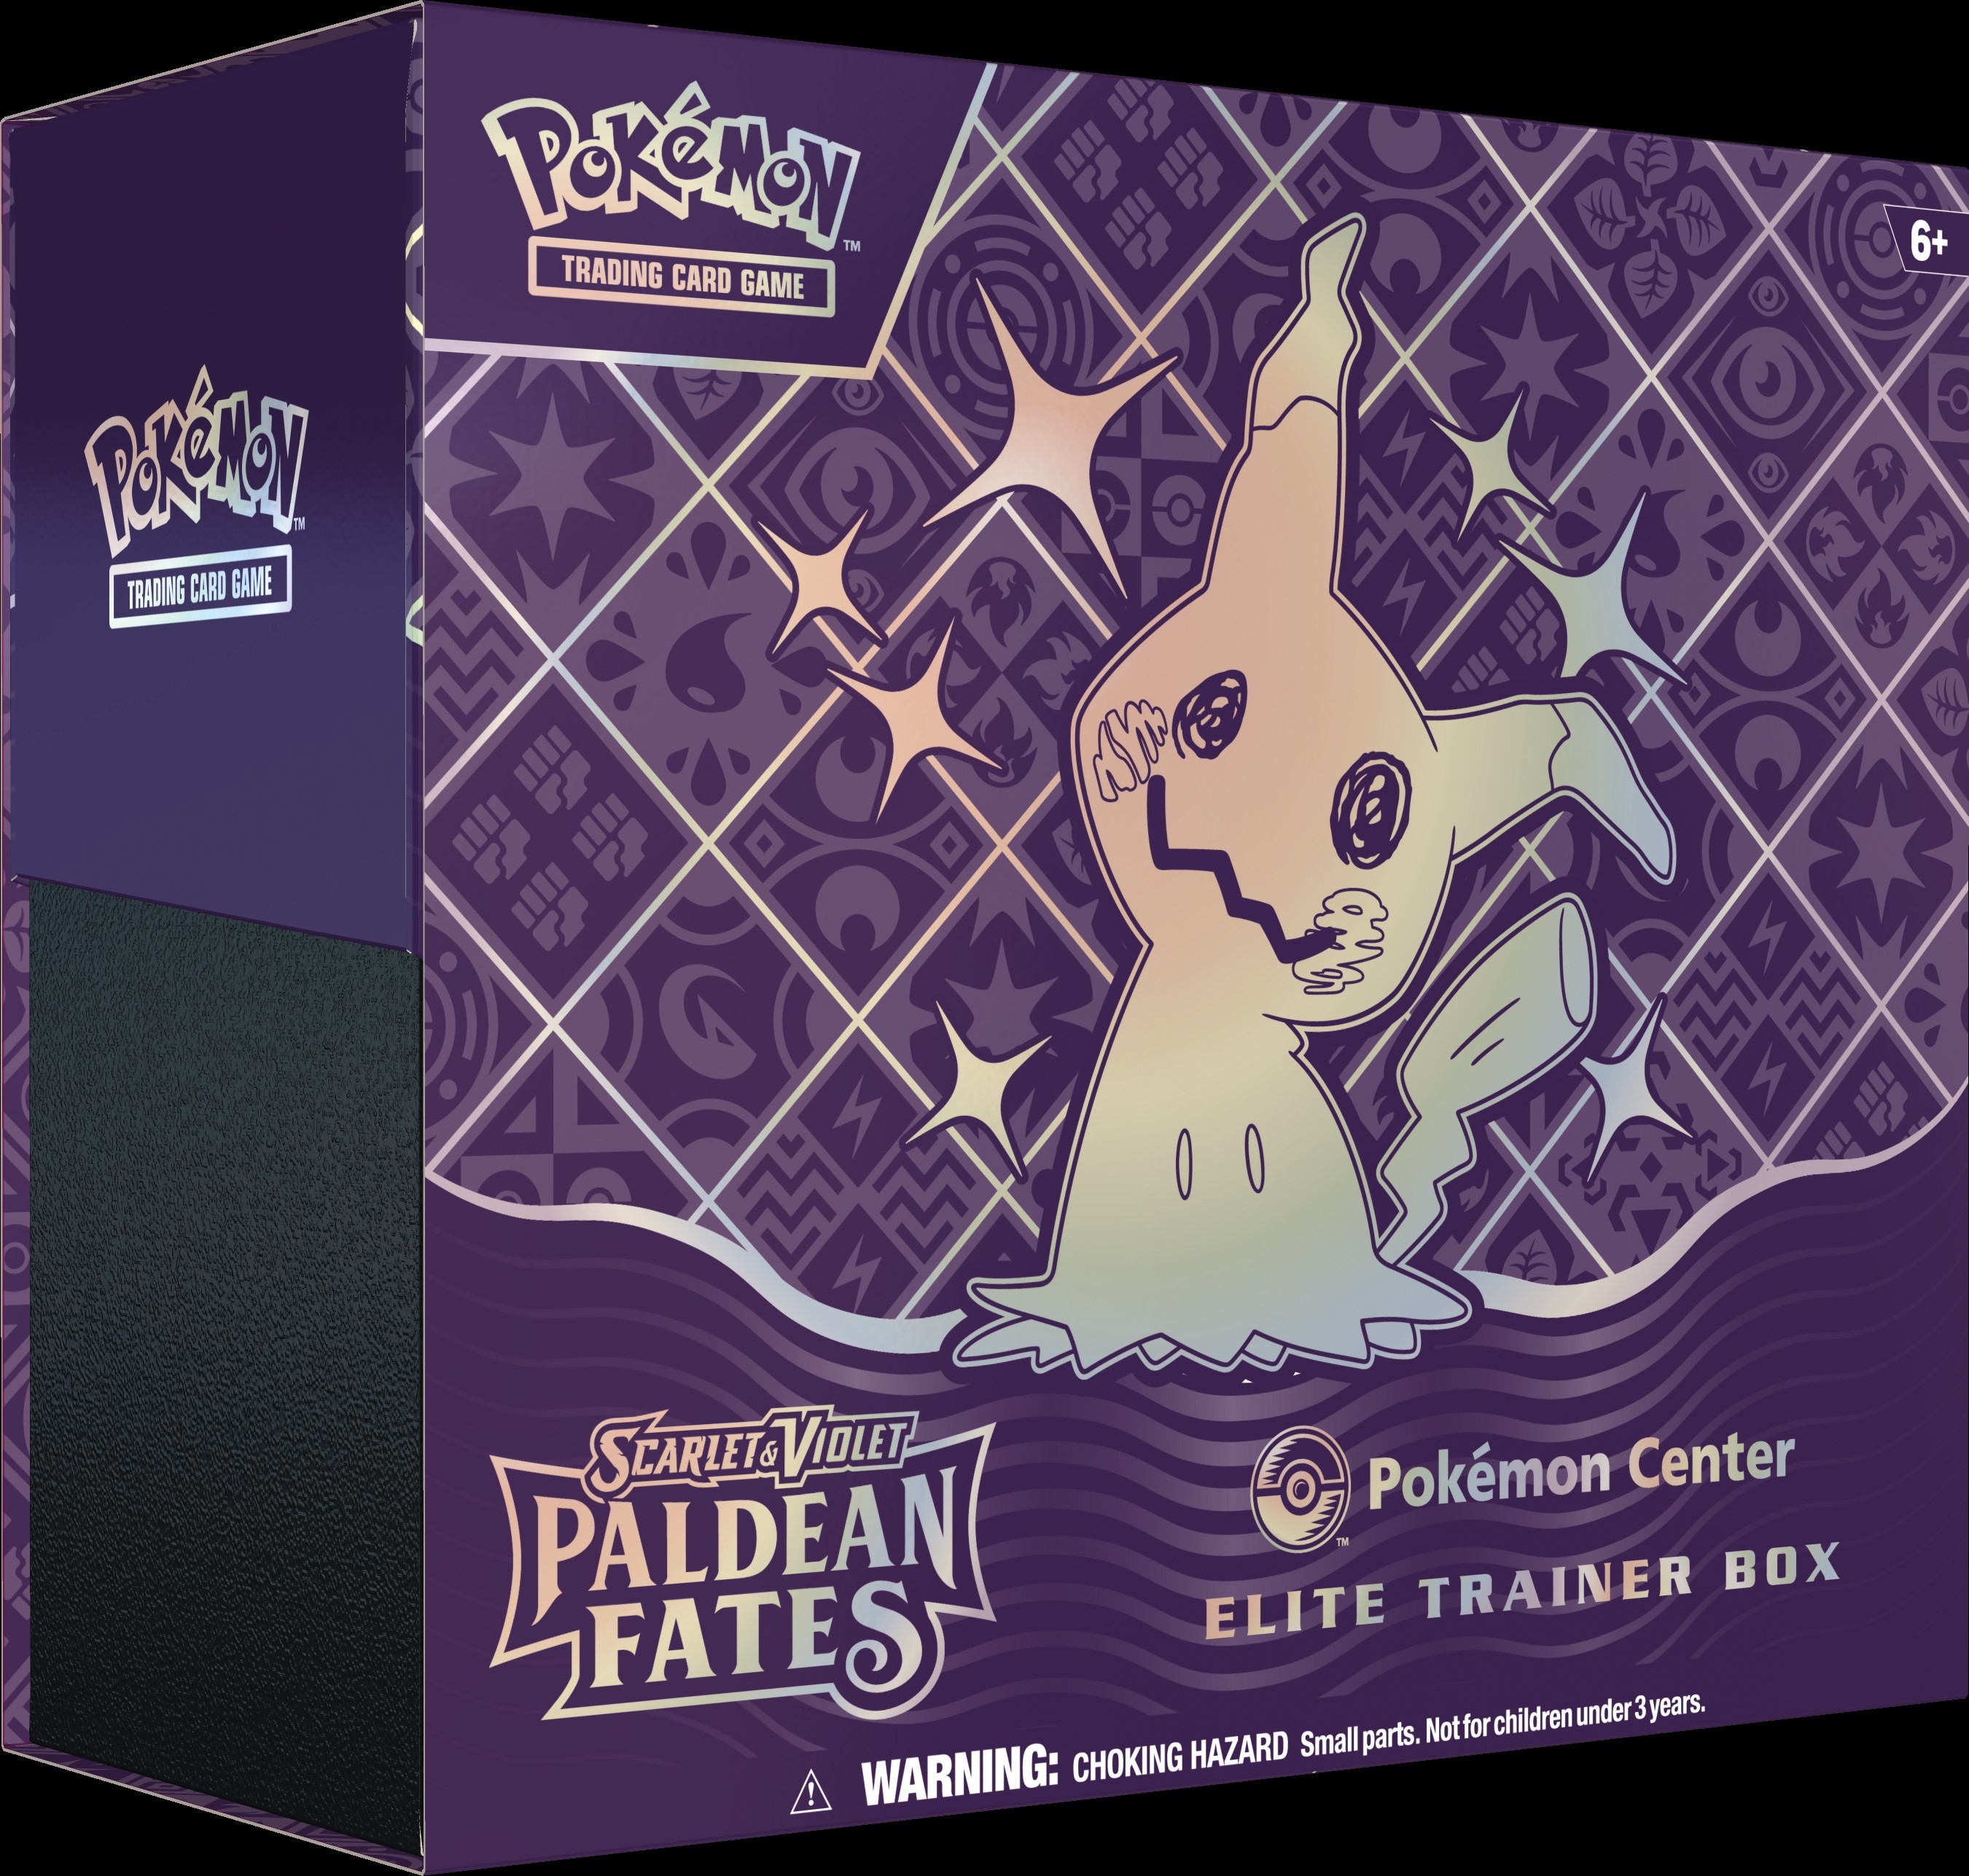 Scarlet & Violet - Paldean Fates Elite Trainer Box, featuring Mimikyu - Pokémon Center edition